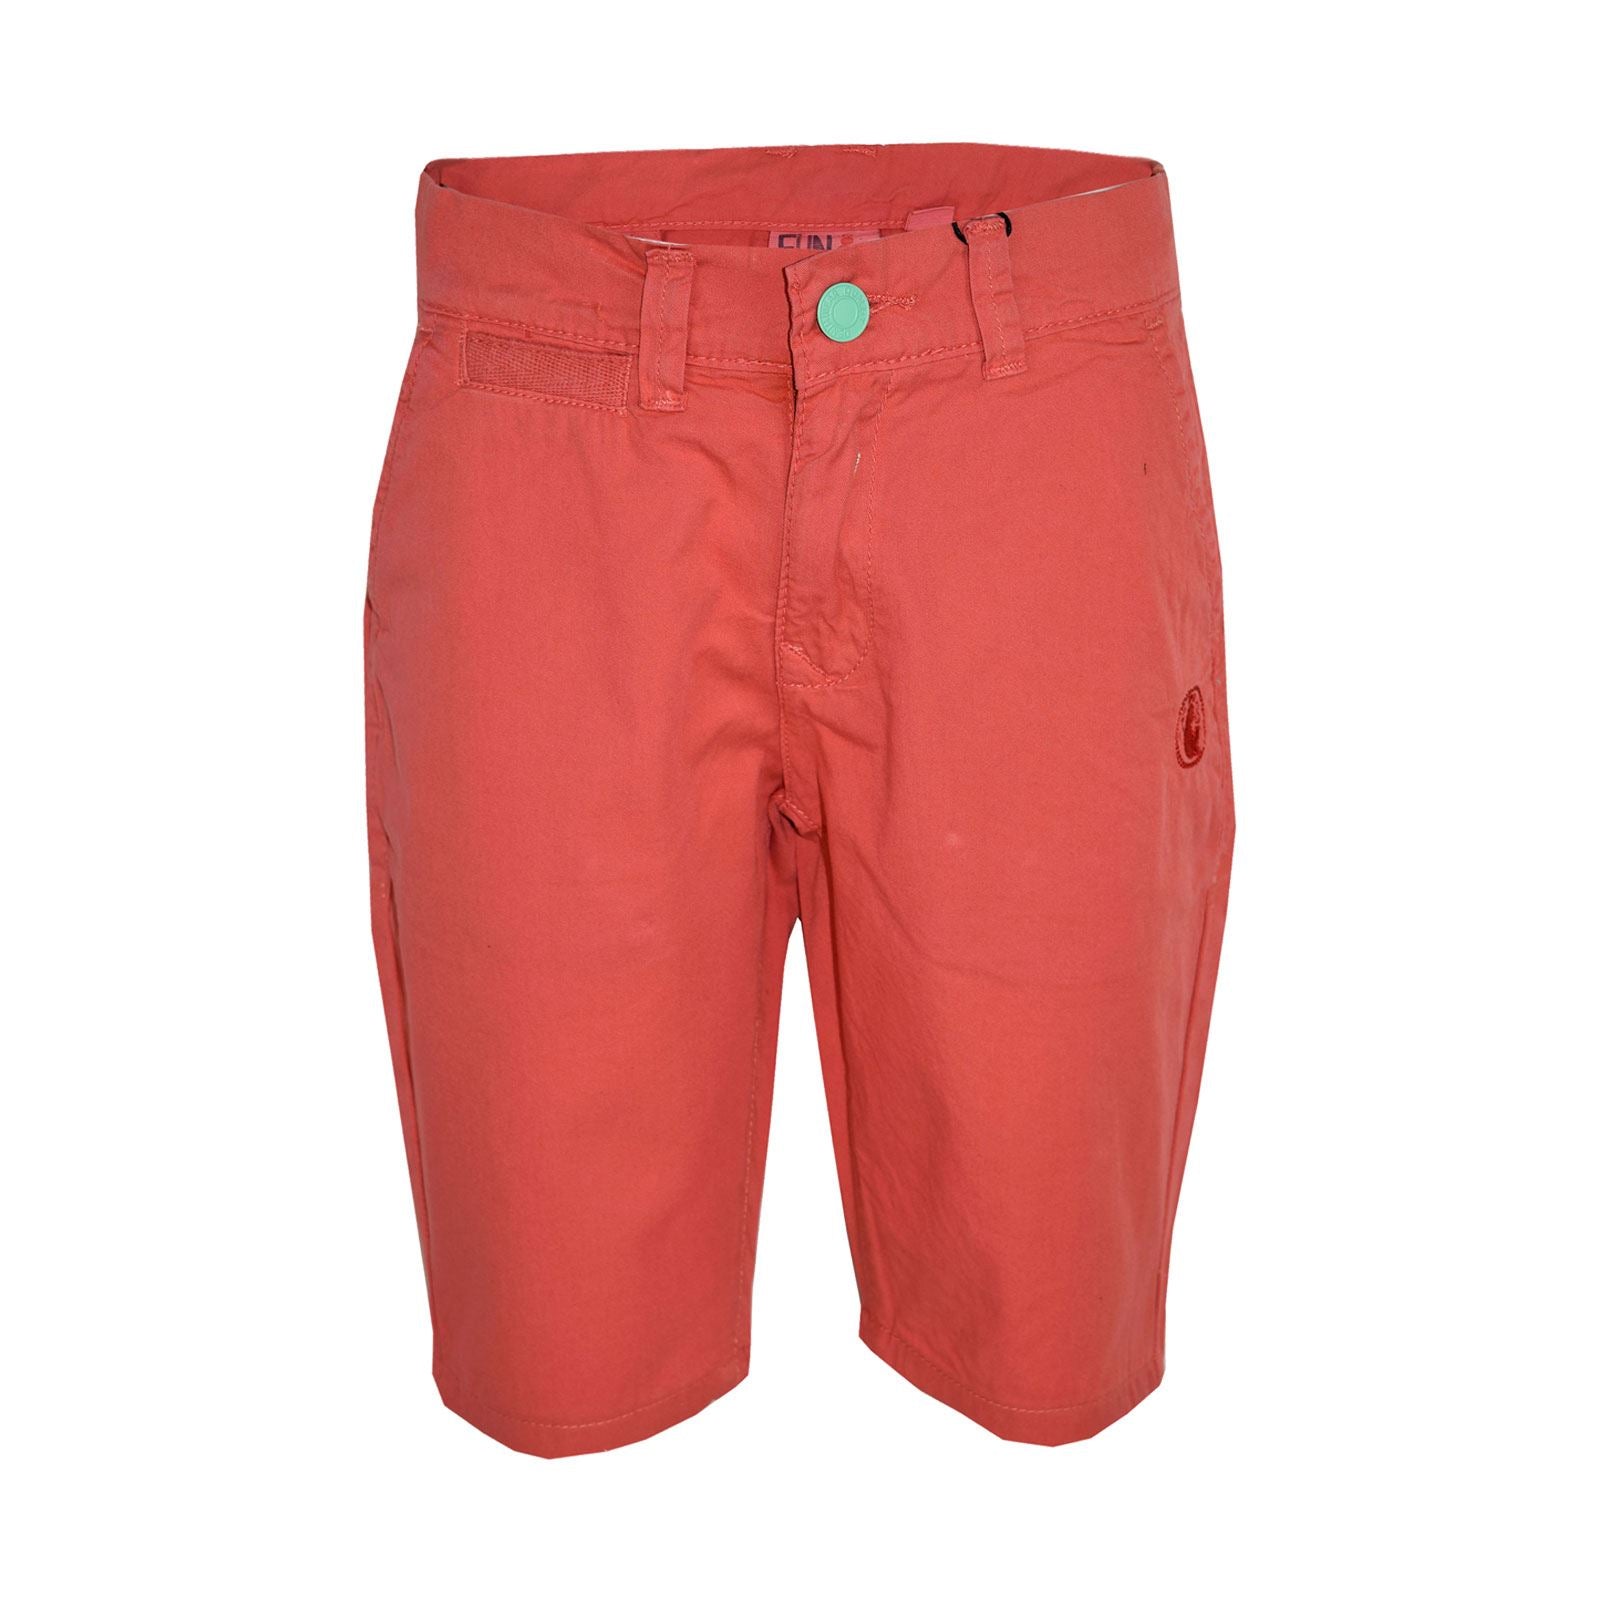 Boys Summer Cotton Shorts Orange Chino Knee Length